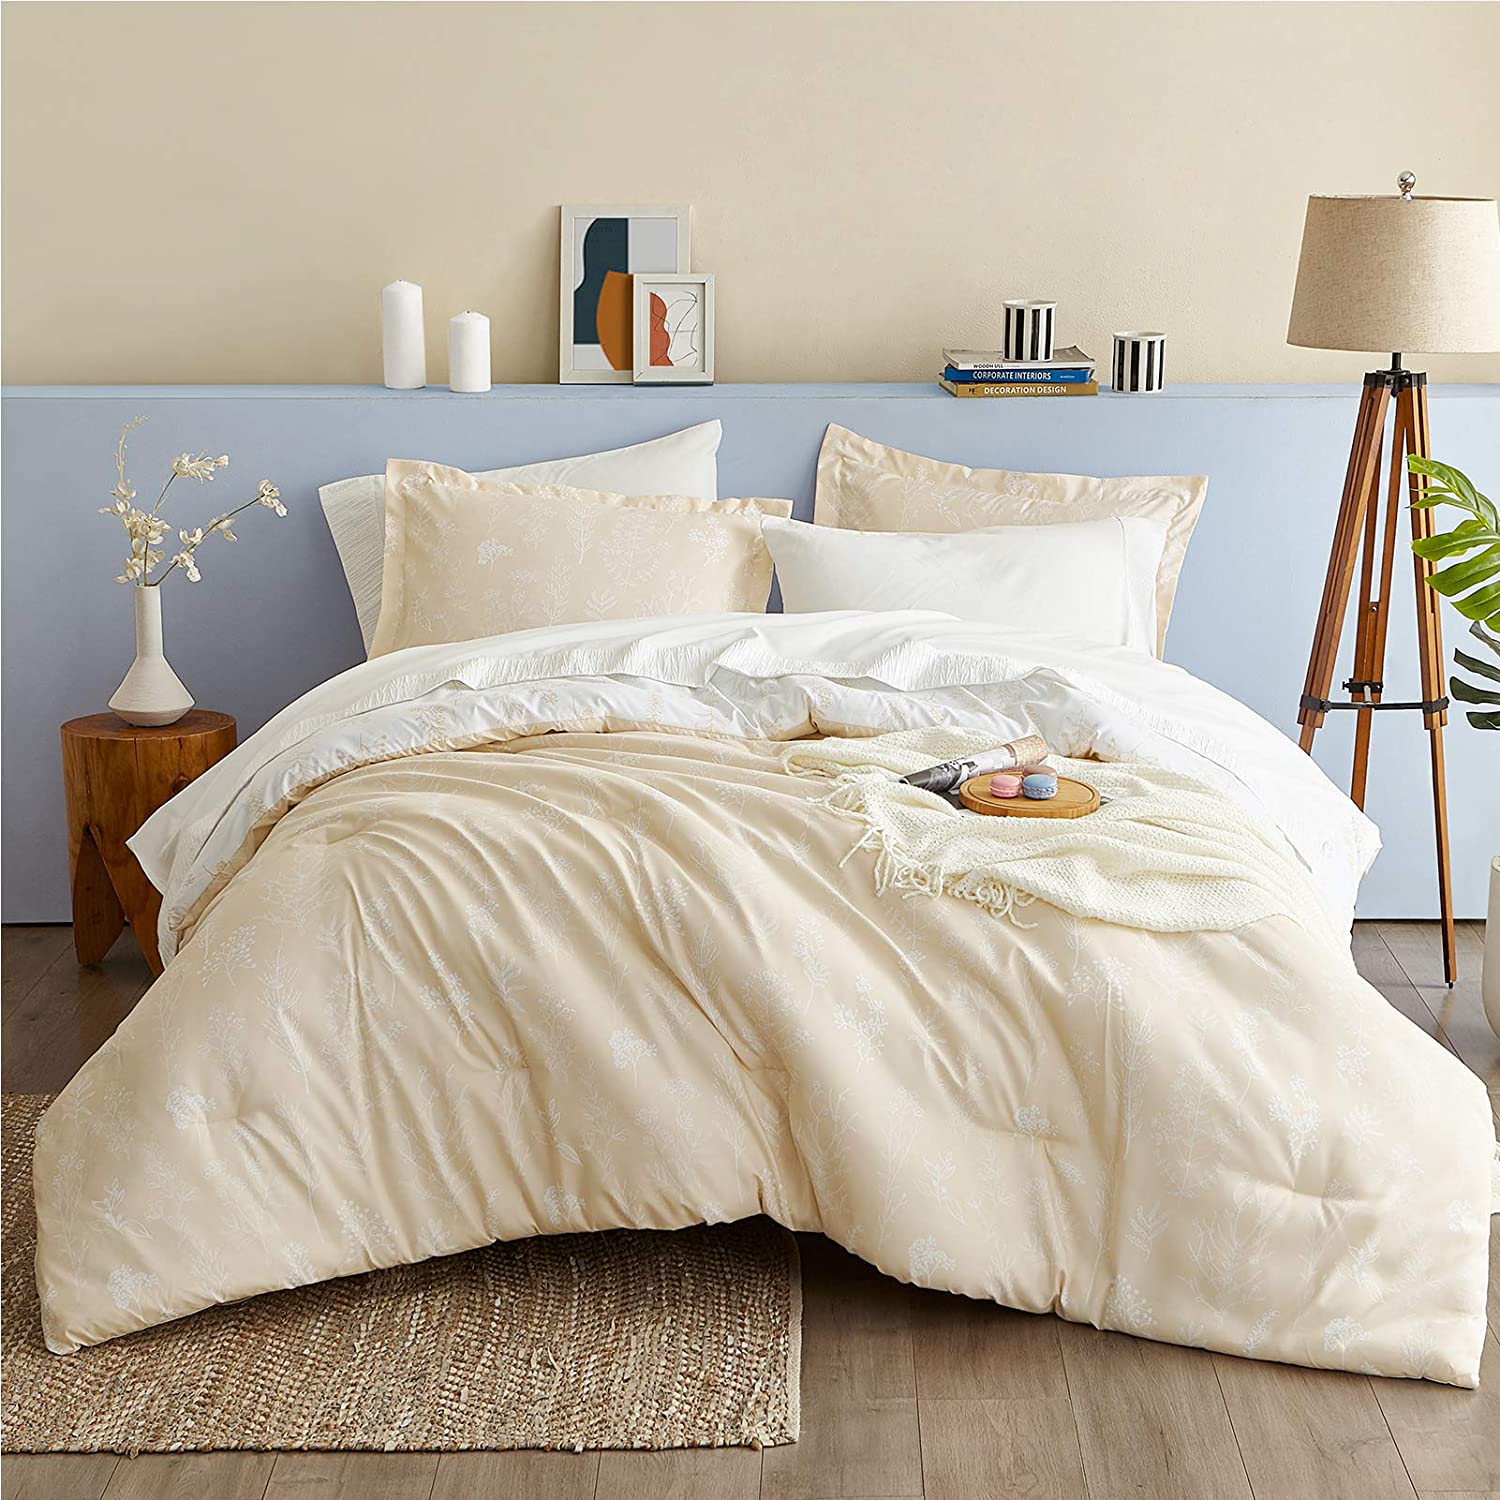 Bedsure Twin Comforter Set Coral Orange White - Reversible Floral